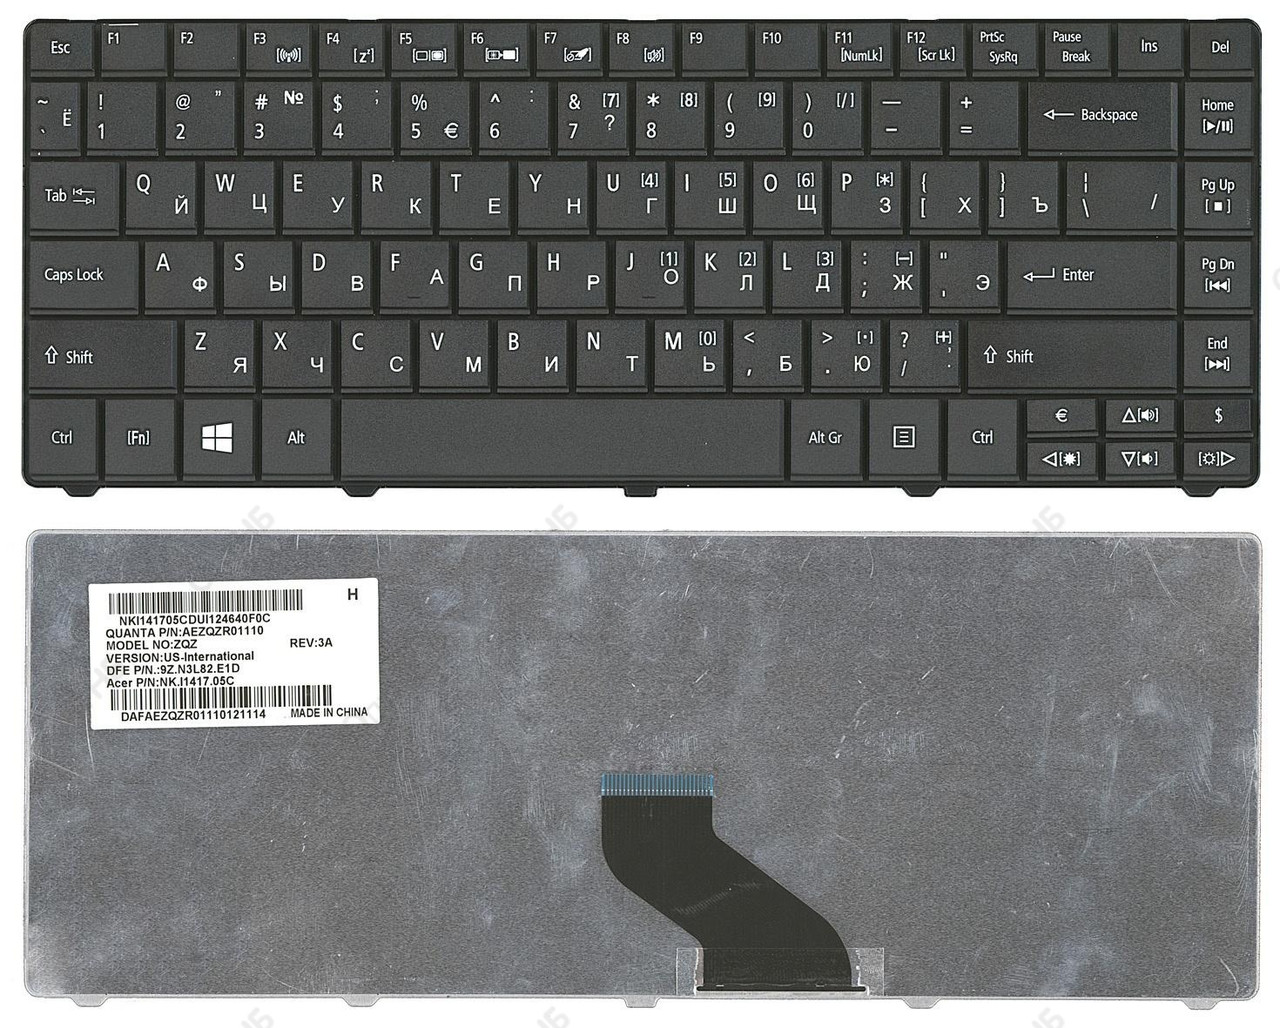 Клавиатура ноутбука ACER TRAVELMATE 8471G